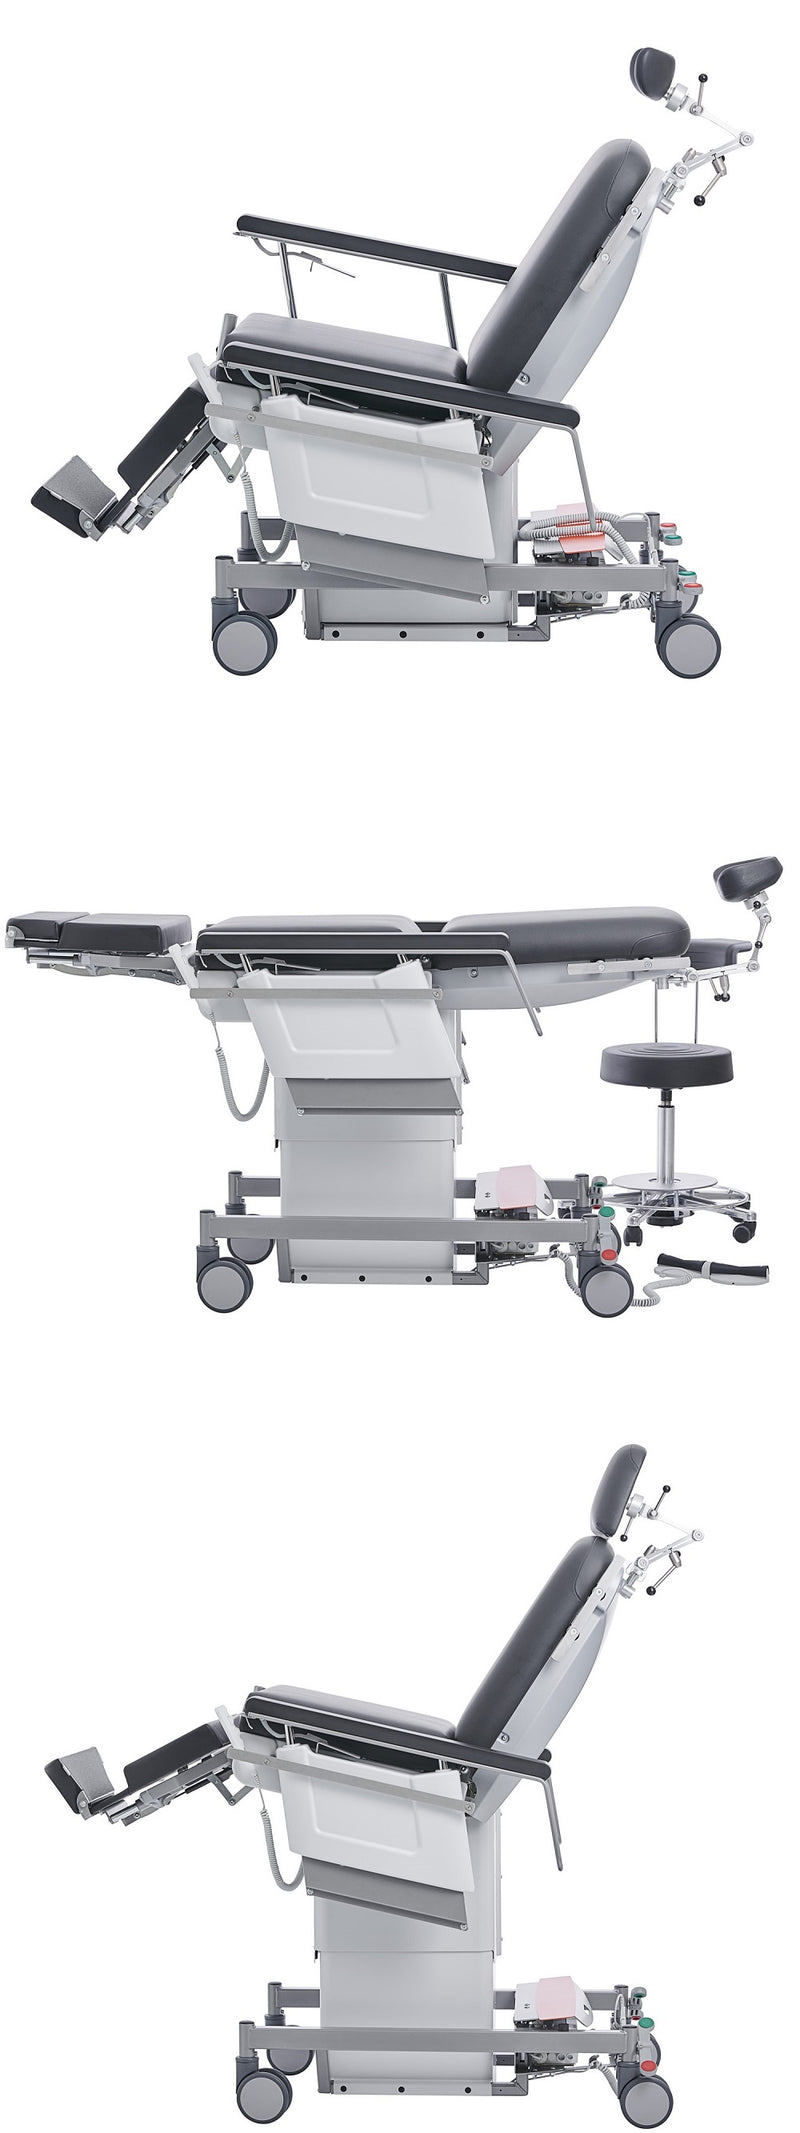 Greiner - Multiline Next AC+ Mobile Surgery Chair